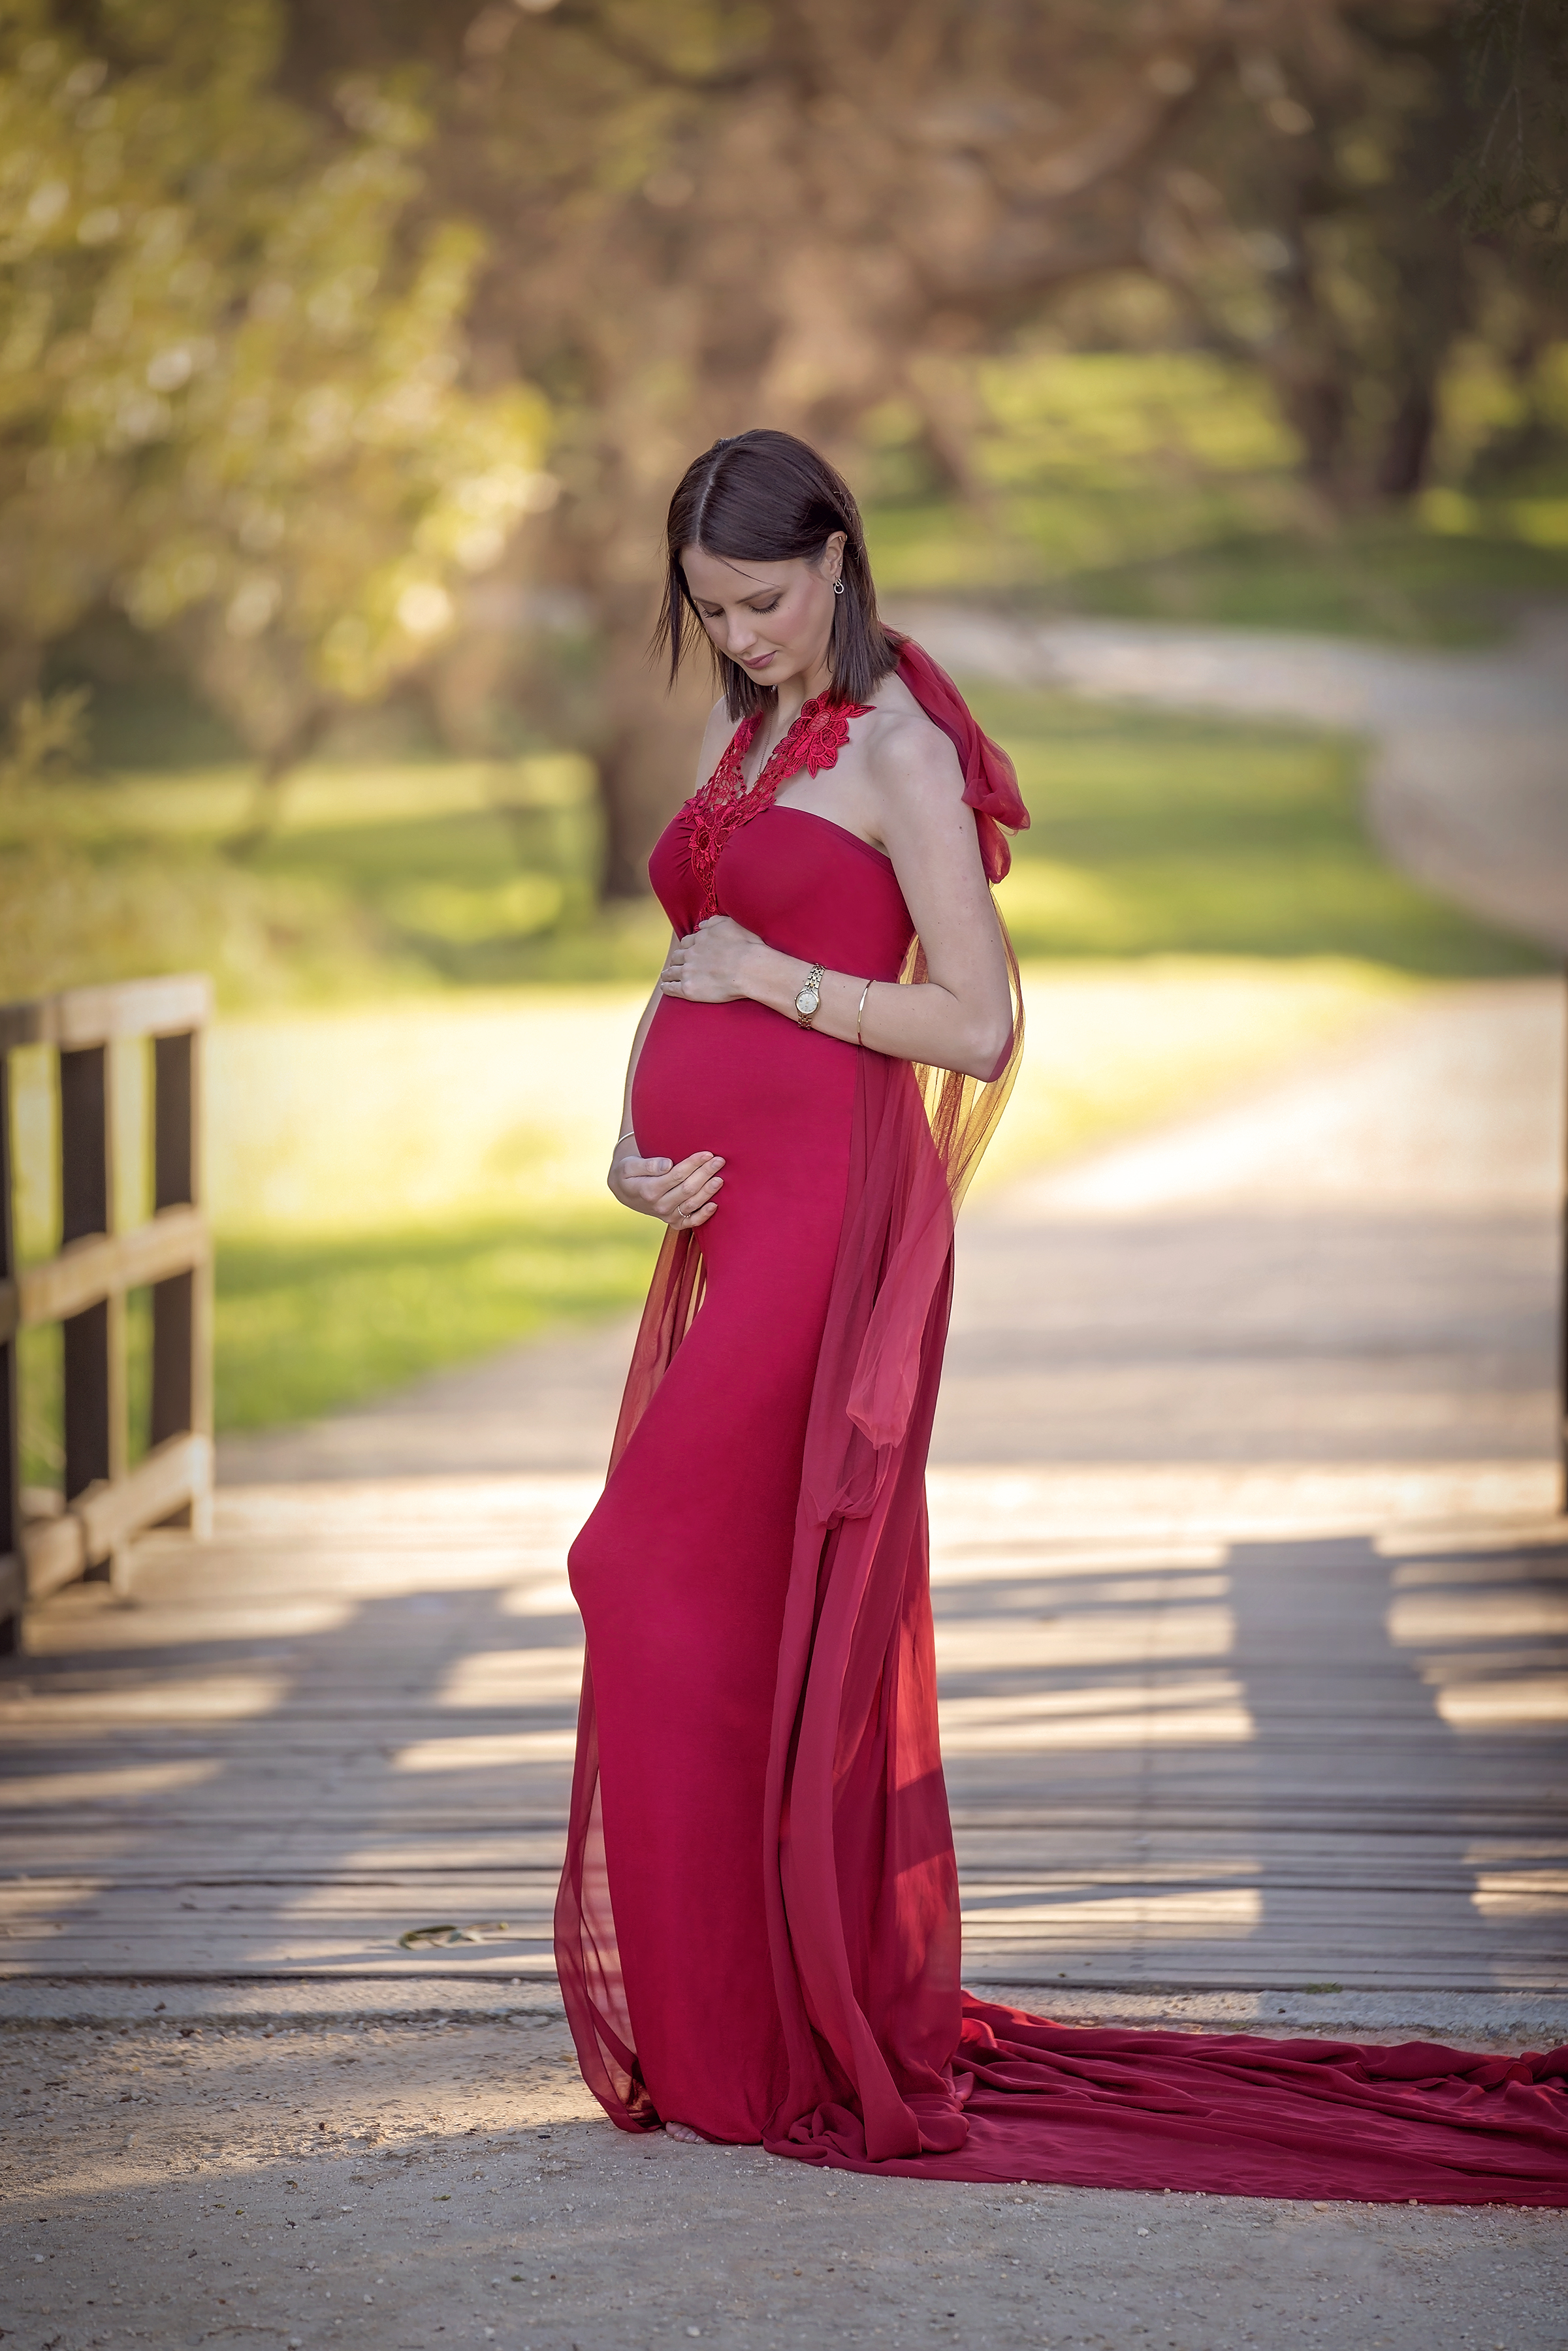 Pregnant Mum photo shoot at Perth Park